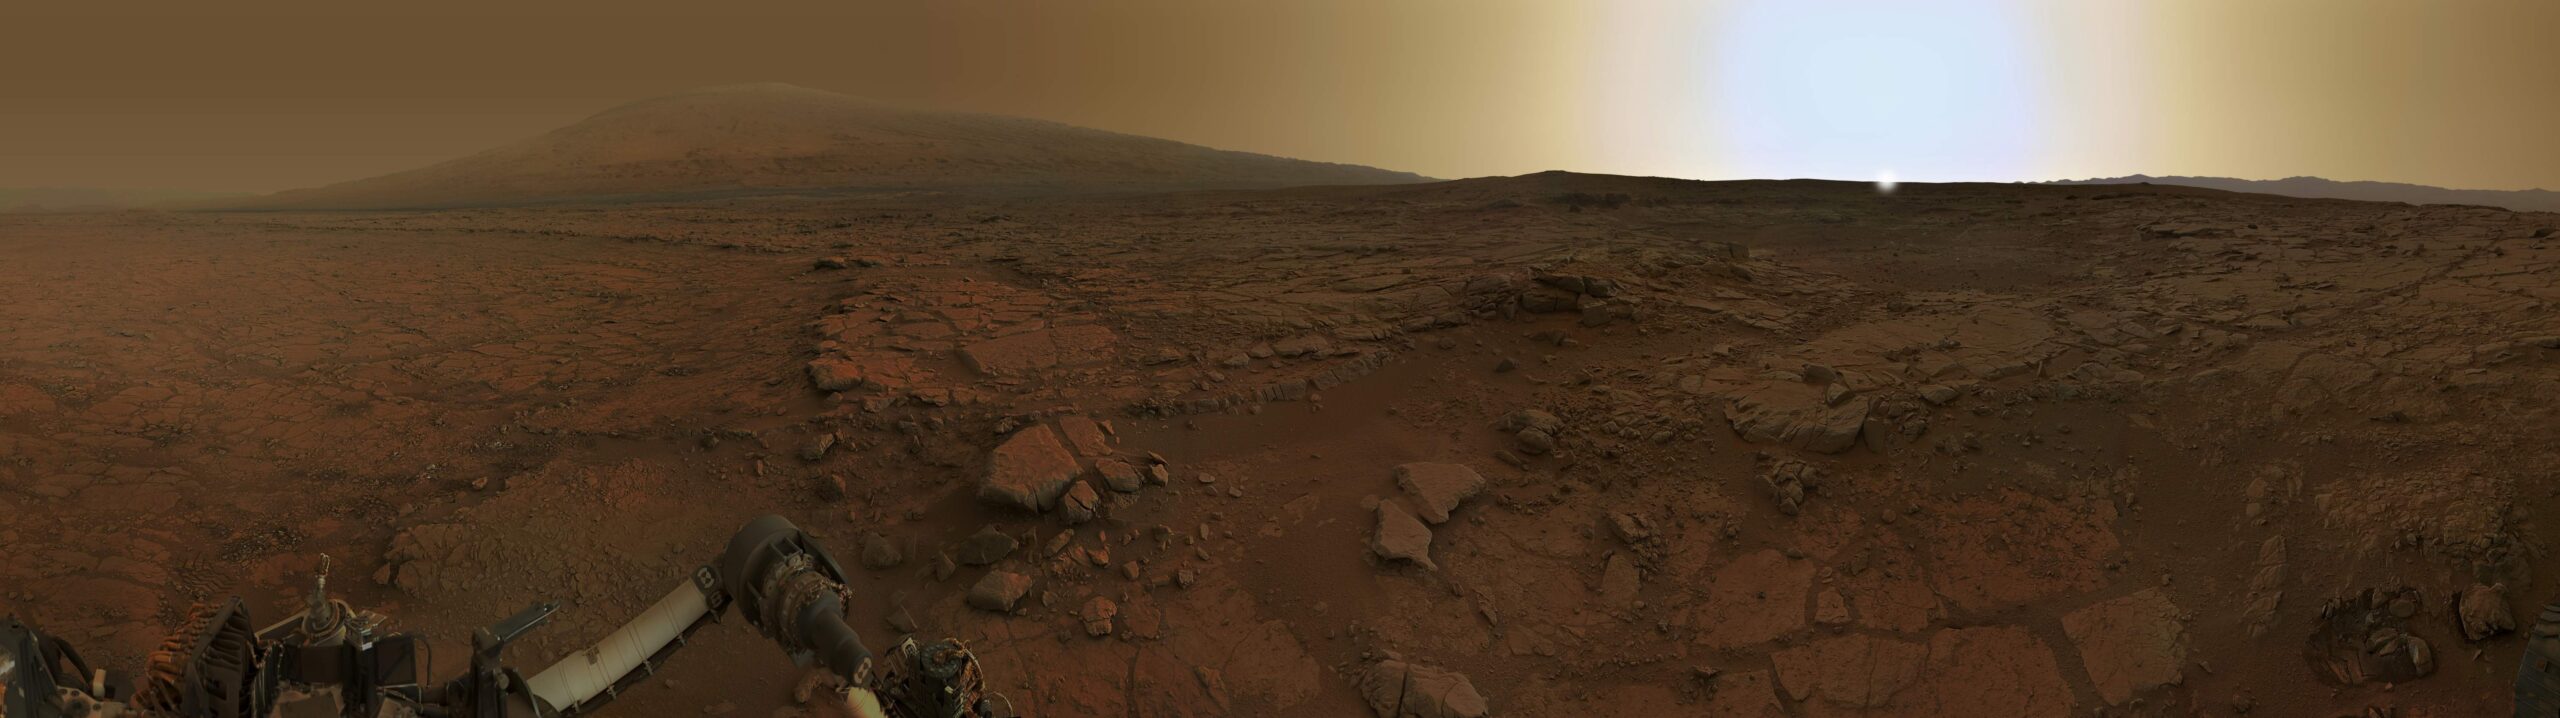 Martian Sunset O de Goursac Curiosity 2013 scaled